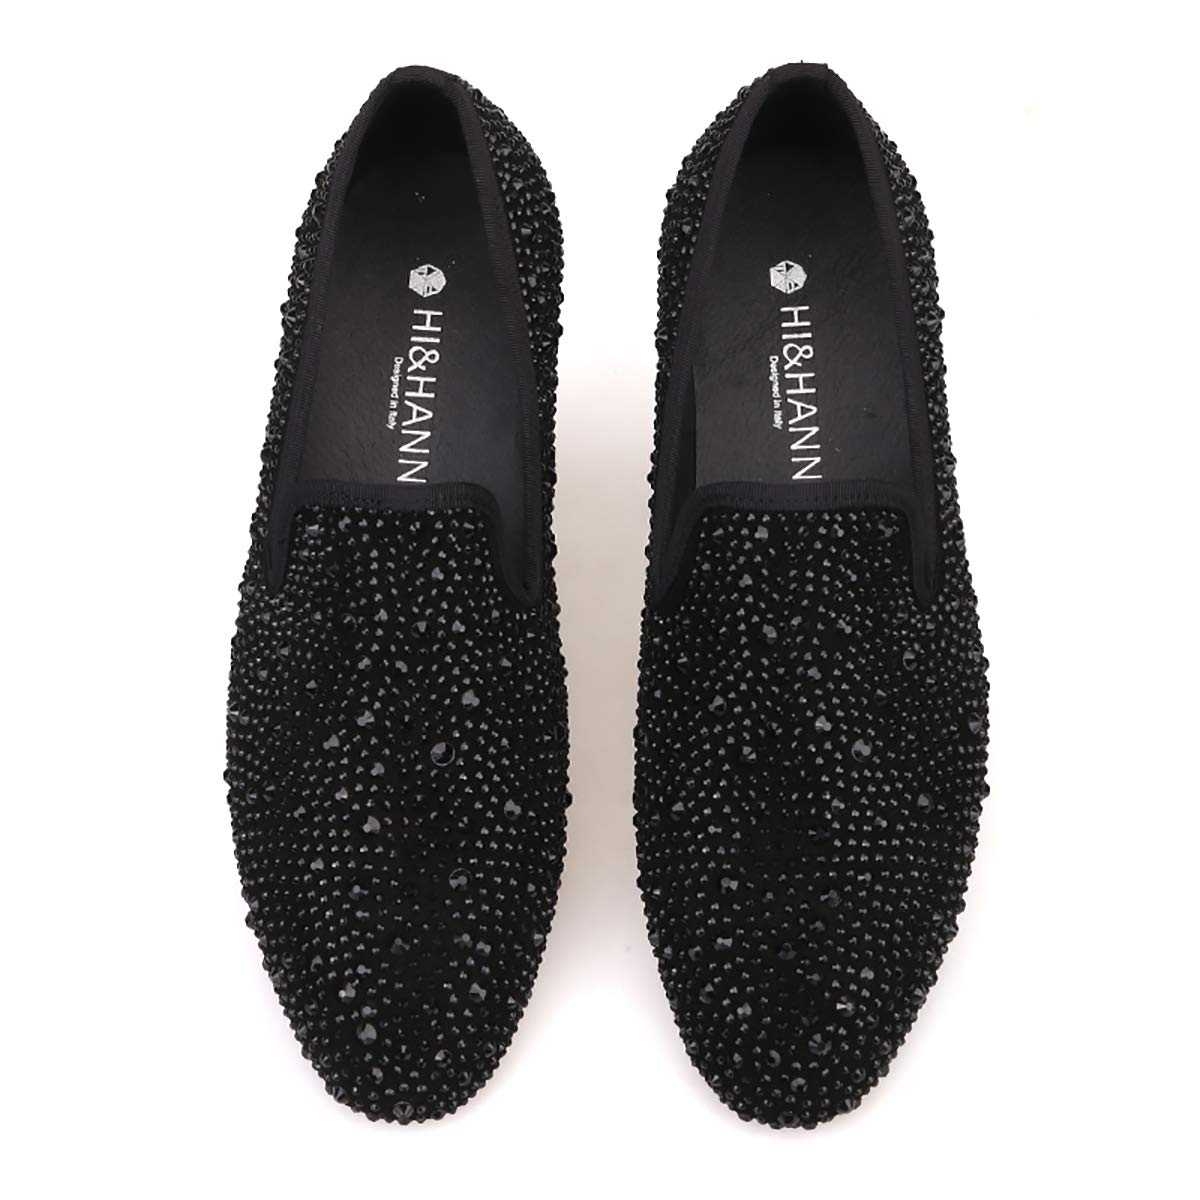 HI&HANN Men's Crystal Suede Genuine Leather Loafer Shoes Slip-on Loafer Round Toes Smoking Slipper